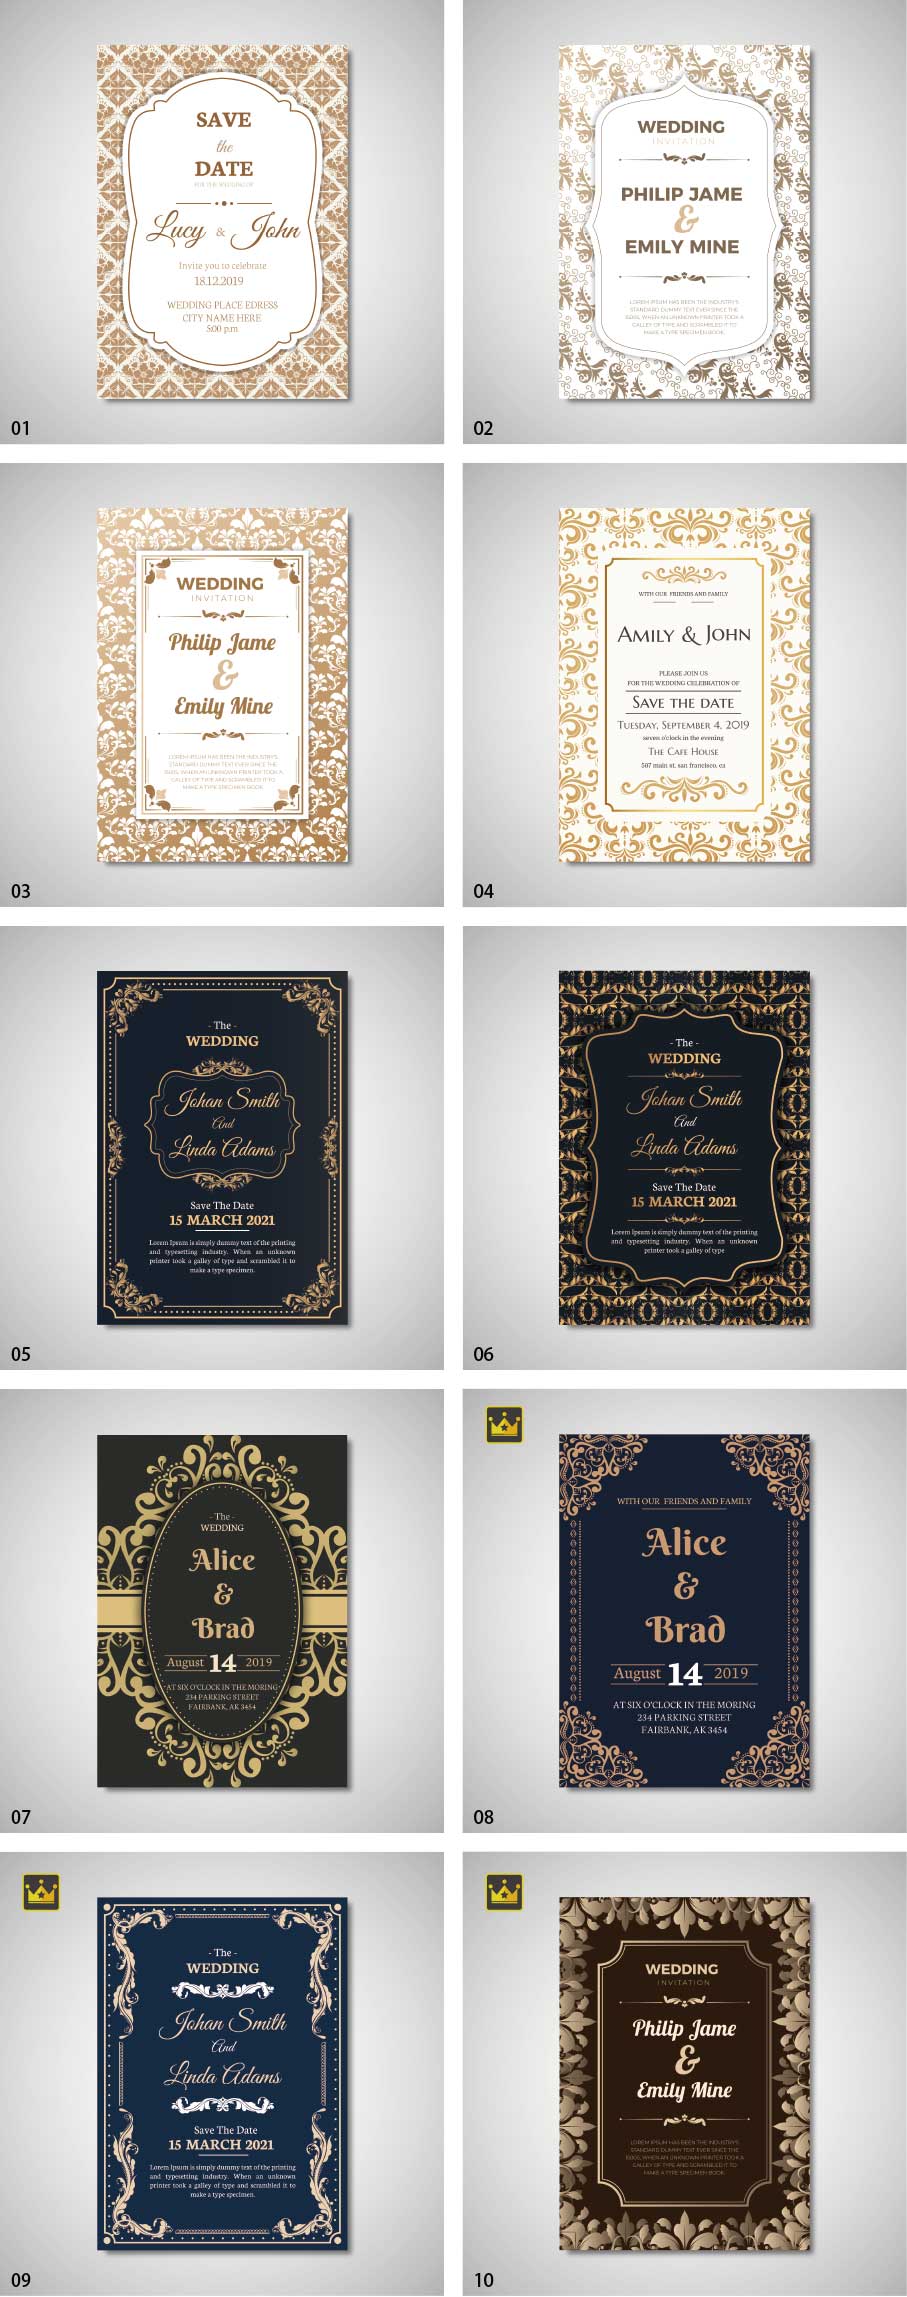 Wedding card templates vol.4